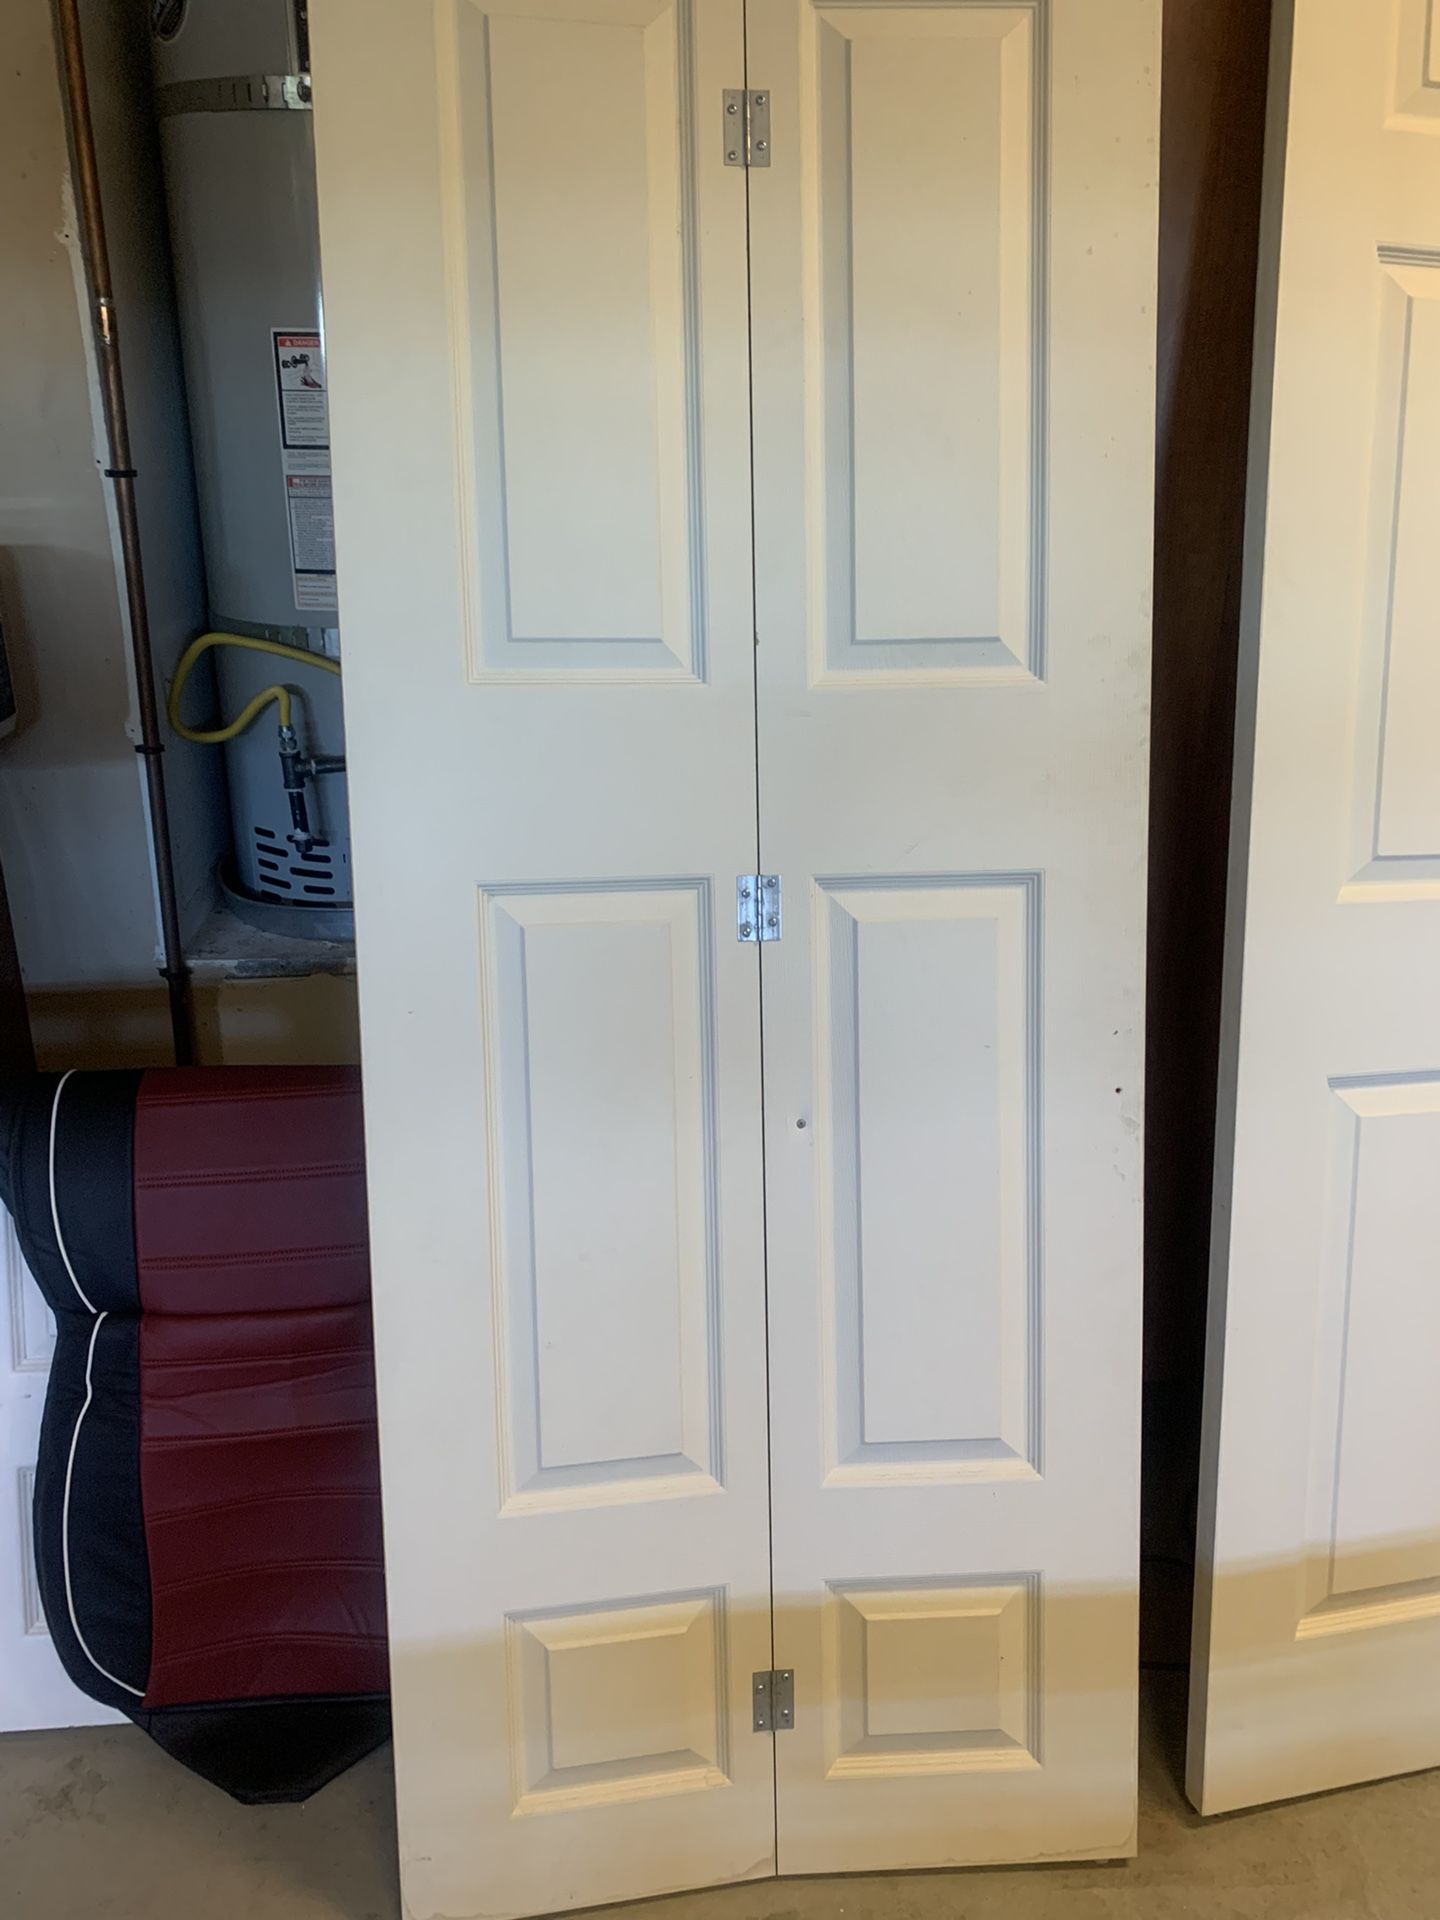 New Laundry Folding Door